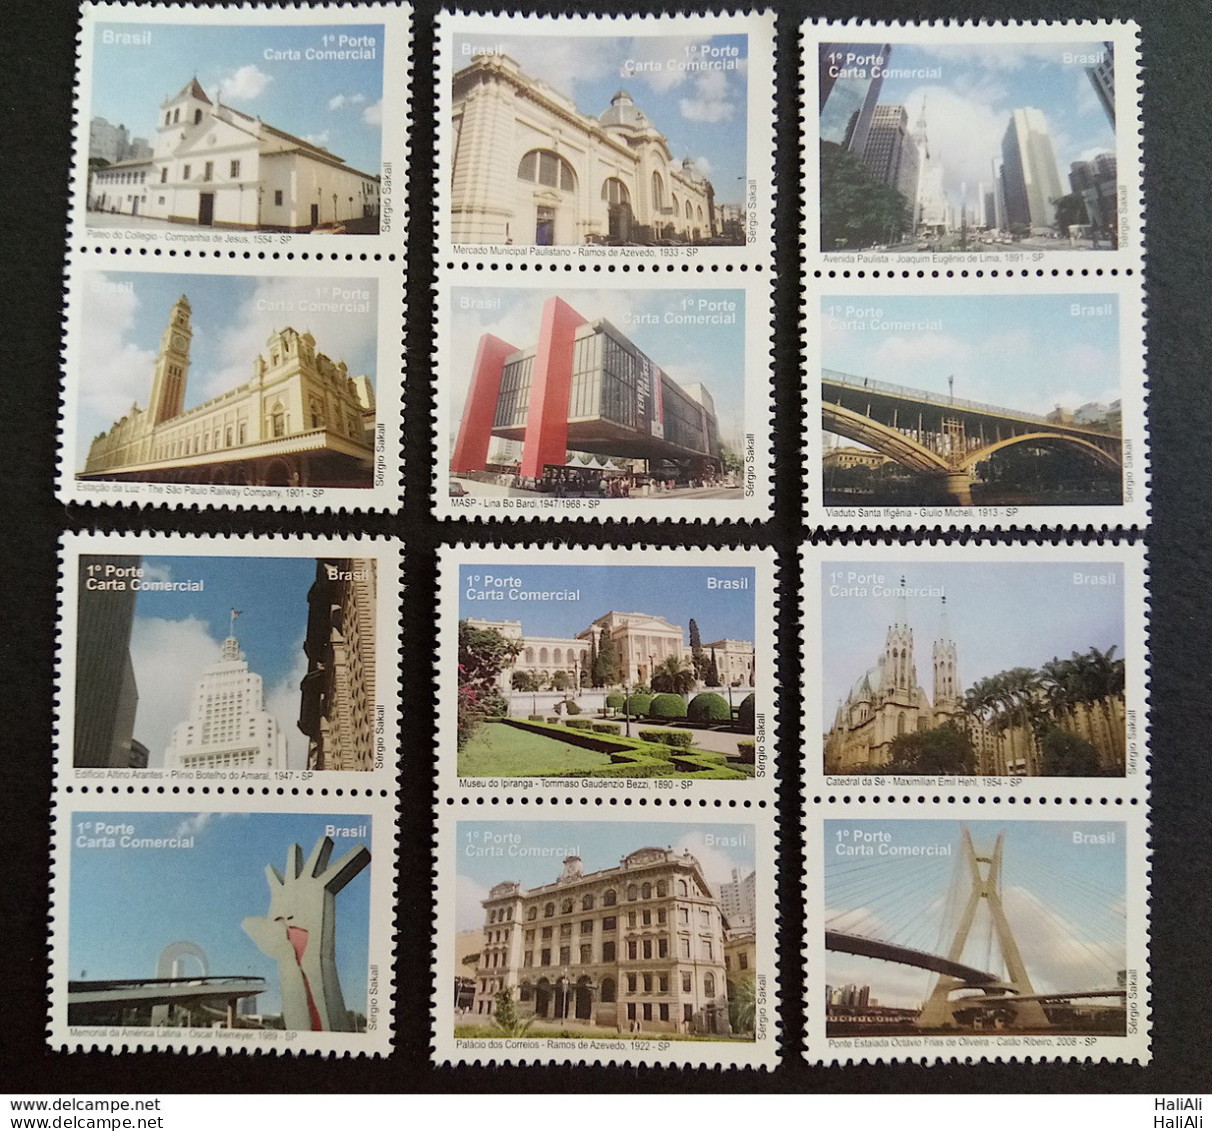 C 2873 Brazil Depersonalized Stamp Tourism Sao Paulo Church Bridge 2009 Horizontal Complete Series - Gepersonaliseerde Postzegels